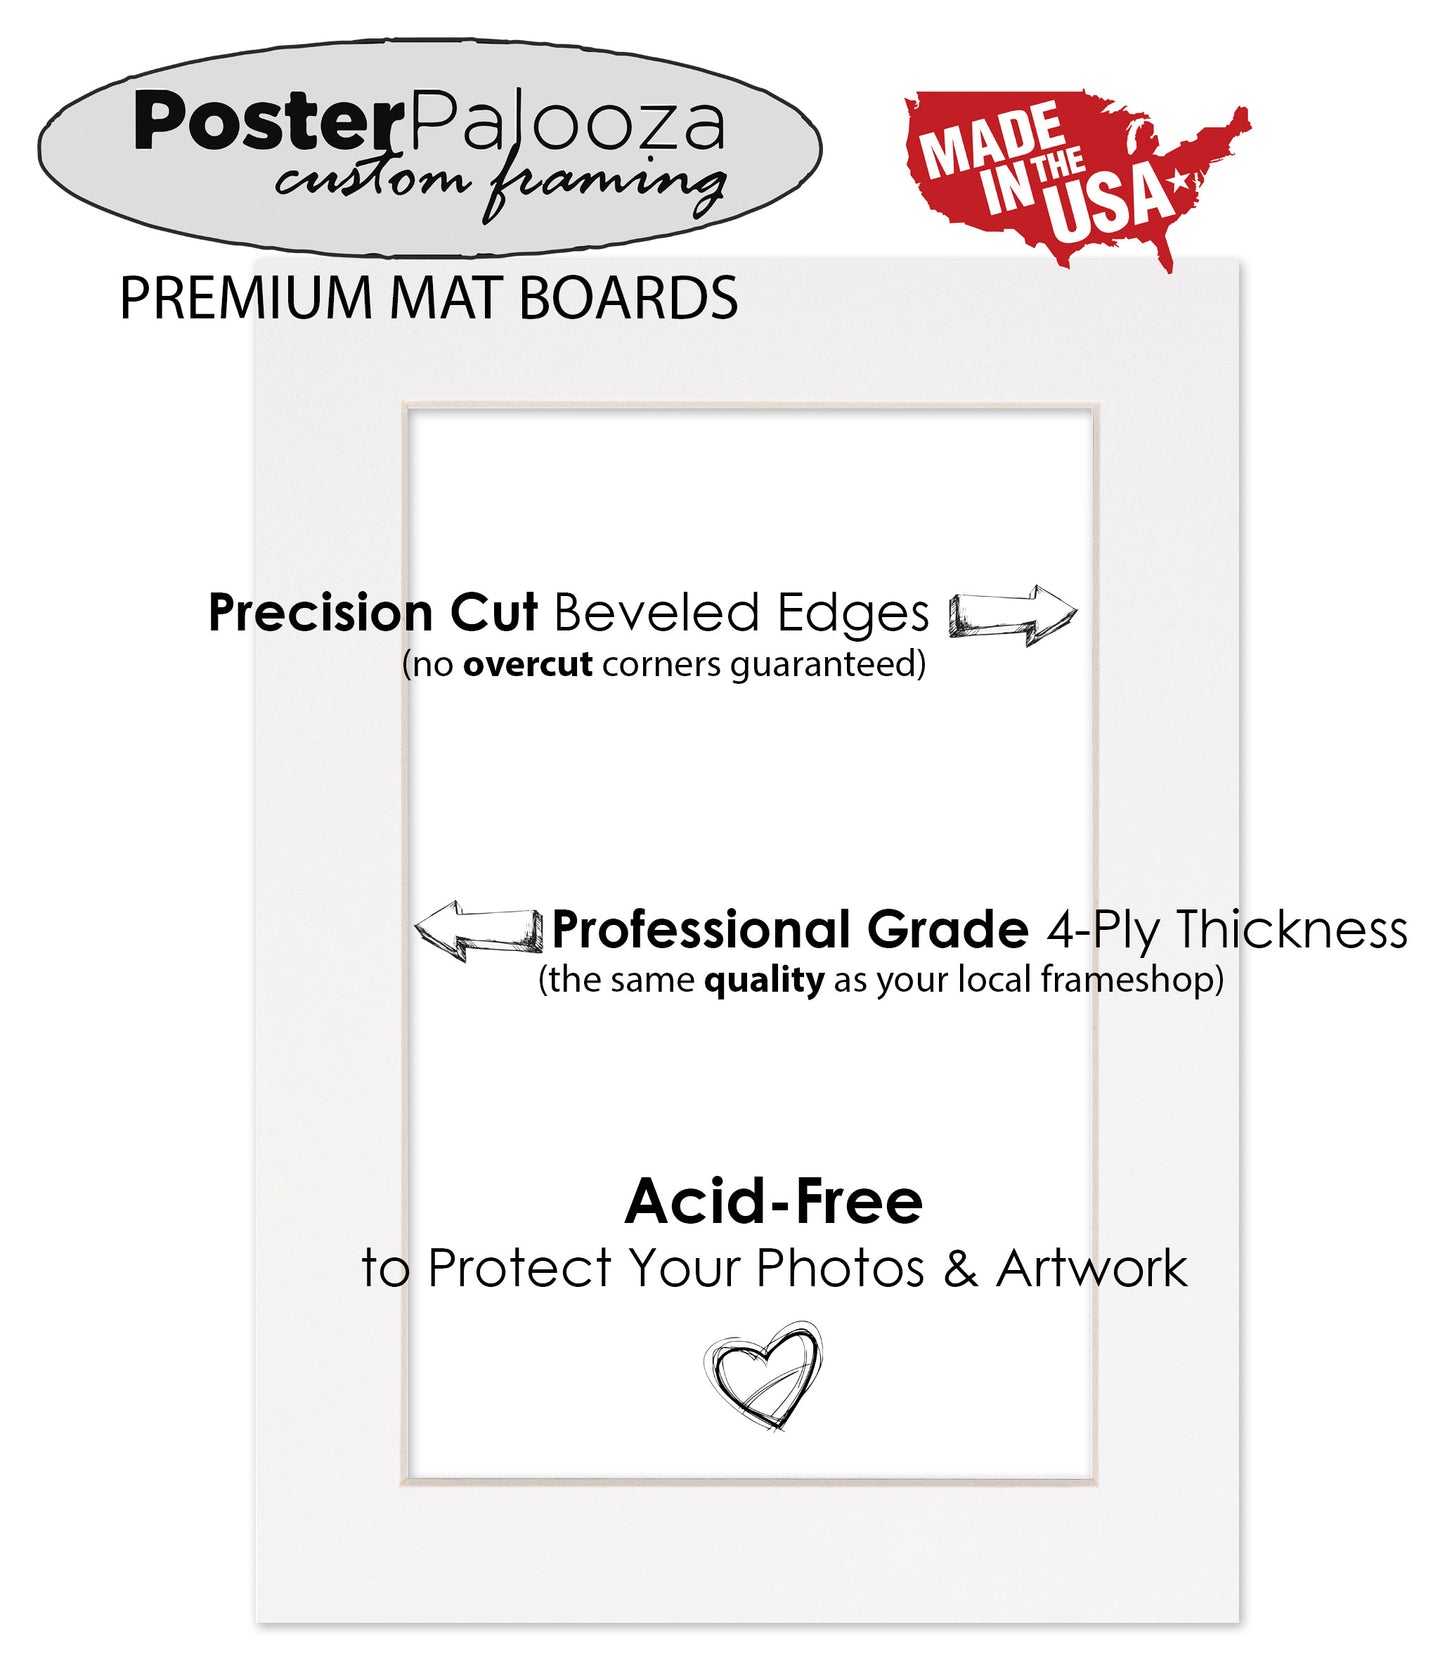 Pack of 10 Yellow Precut Acid-Free Matboards